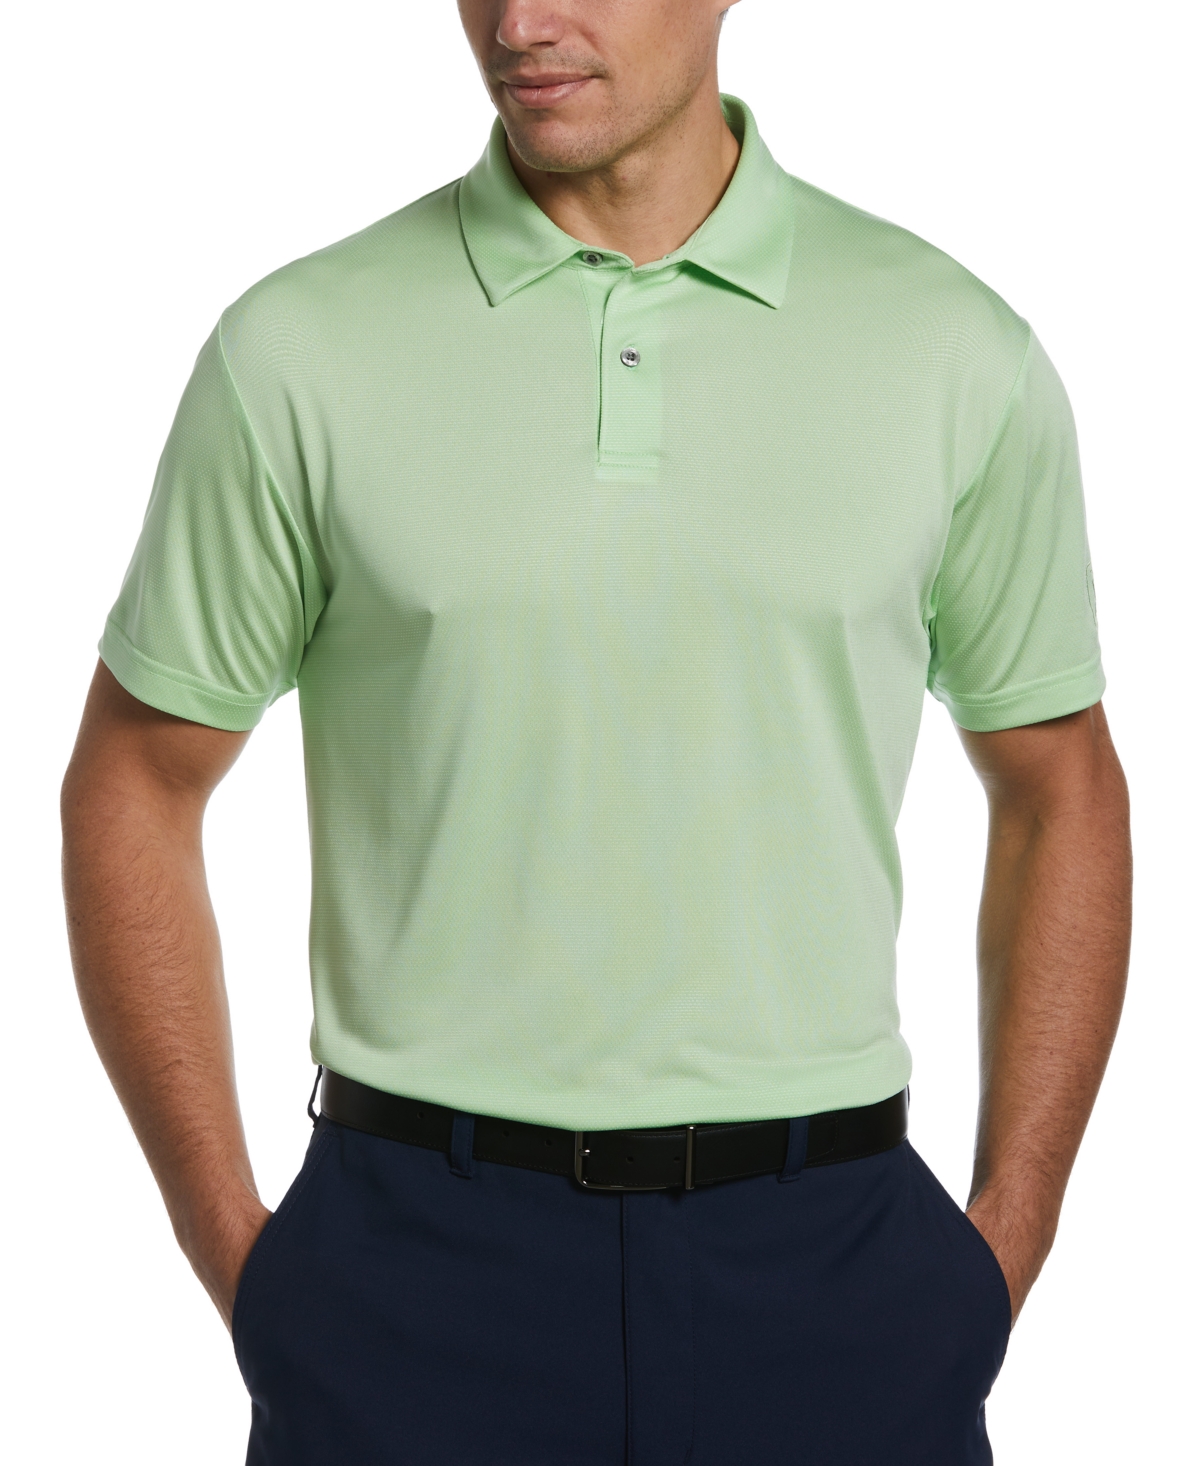 Men's Birdseye Textured Short-Sleeve Performance Polo Shirt - Persian Jewel